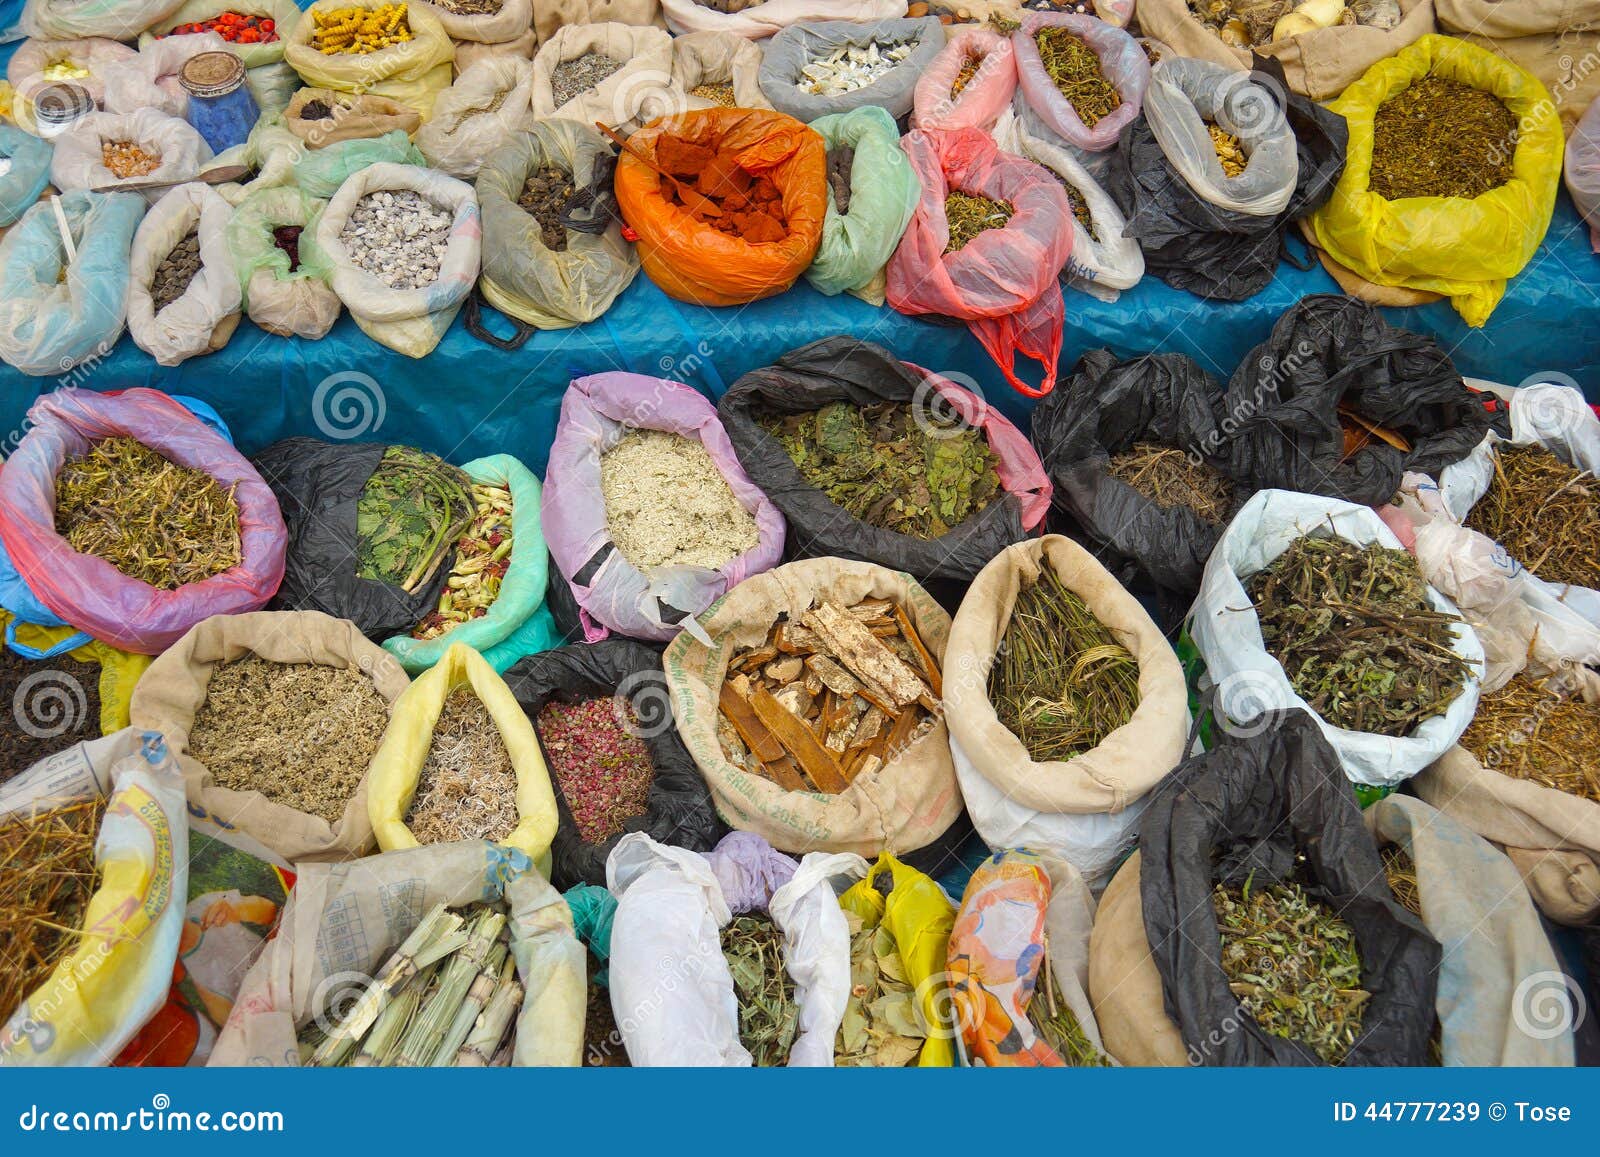 herbs, potions and powders. market in pukara, puno, peru